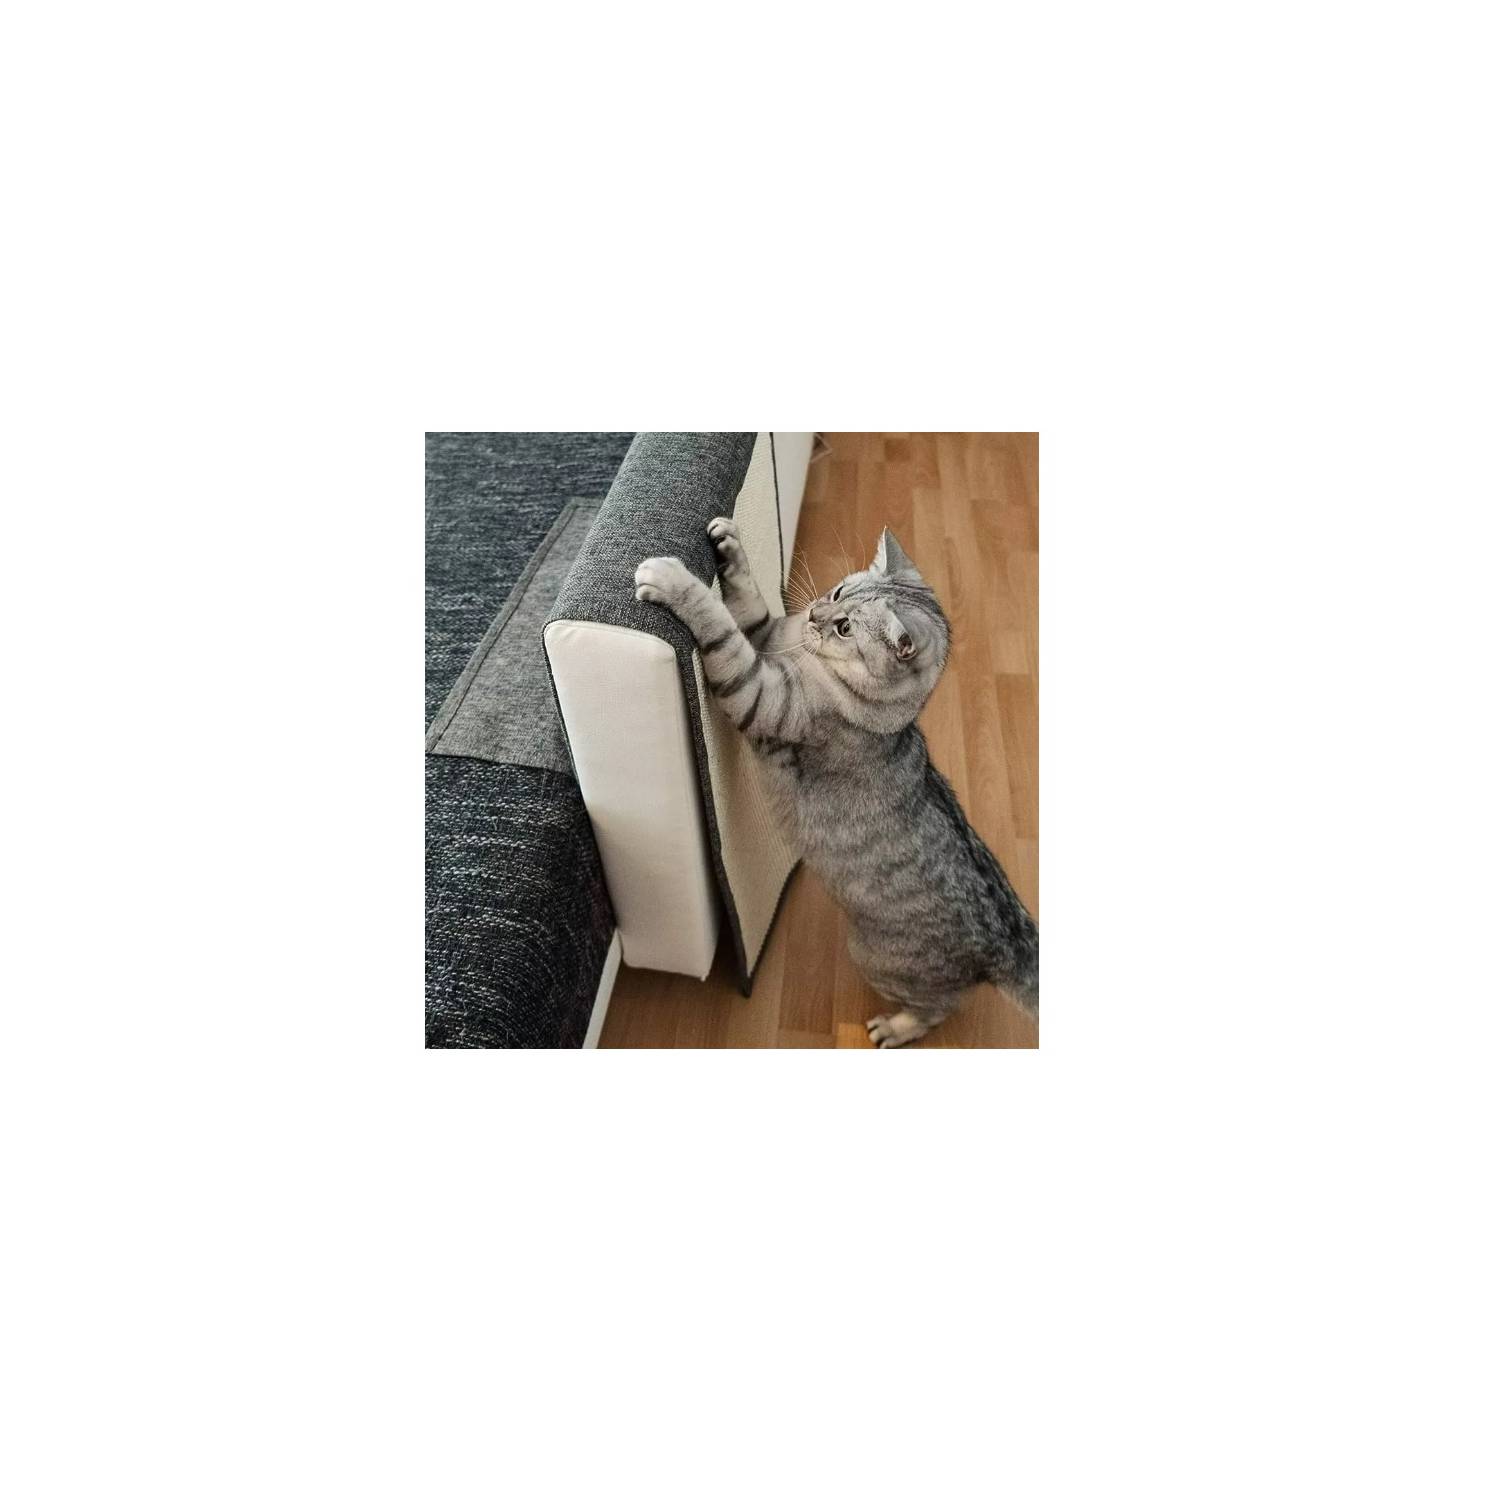 Rascador para gato juguete cubre muebles protector de sofá GENERICO